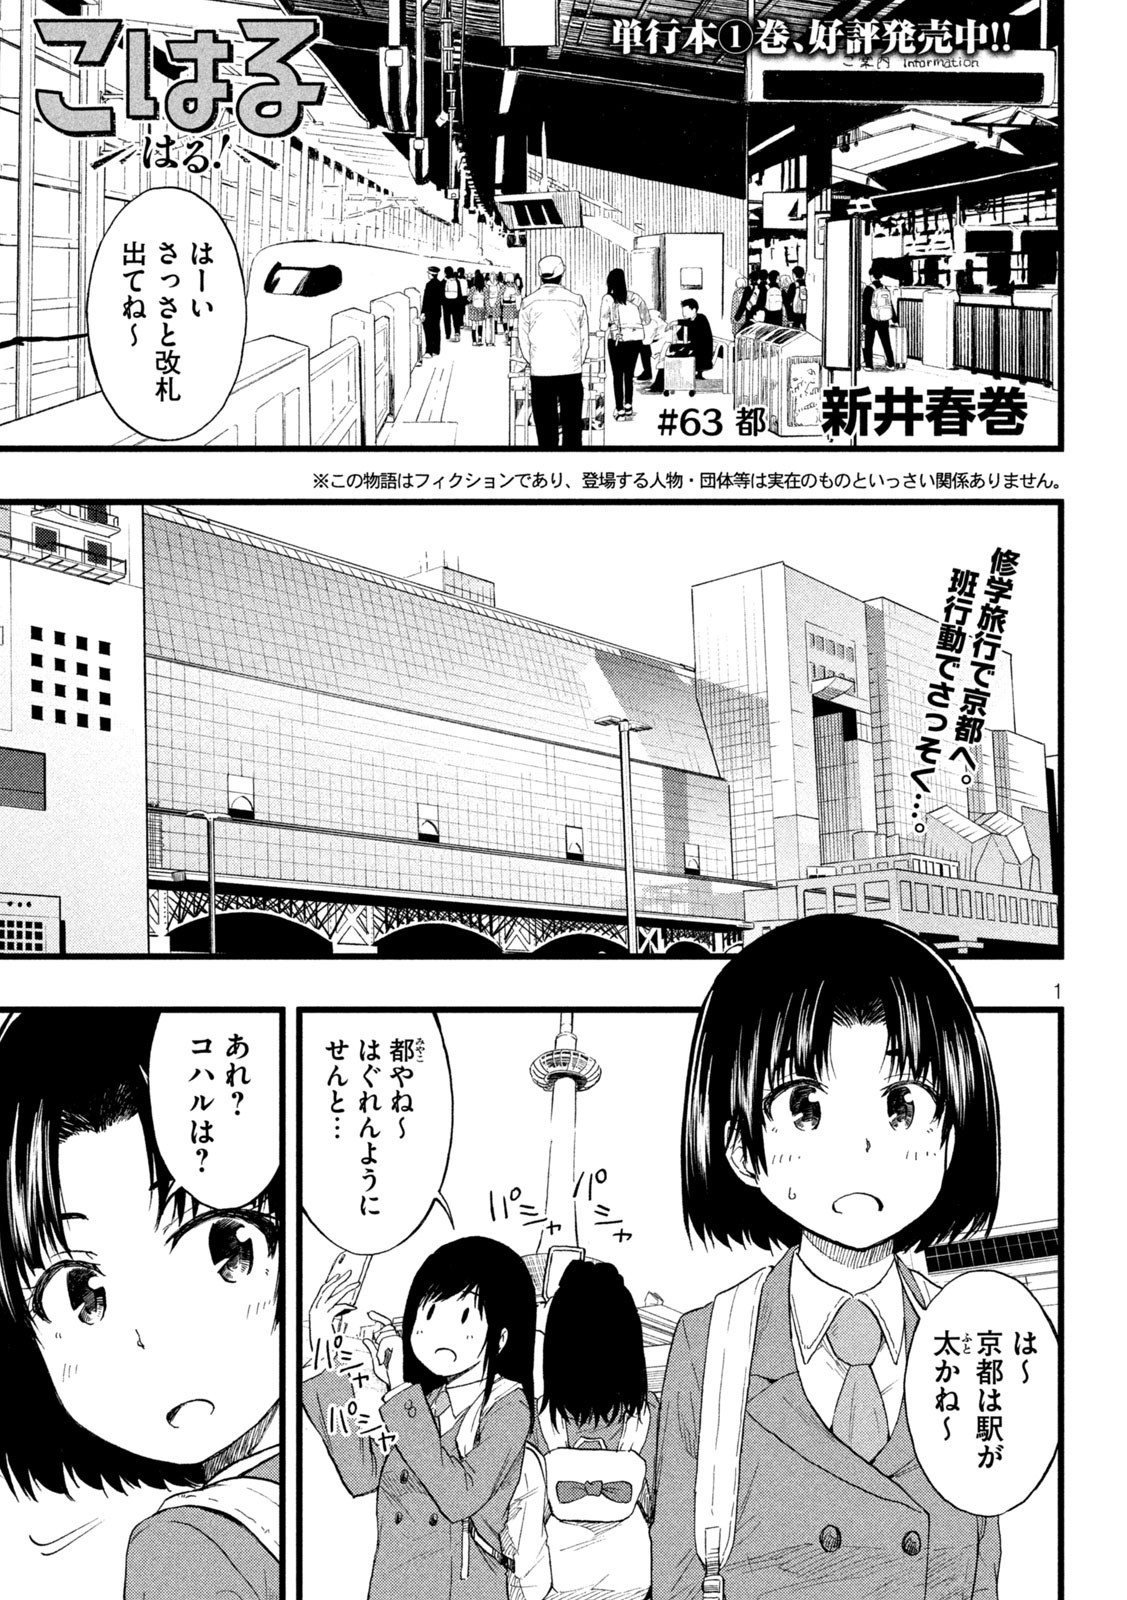 Koharu haru! - Chapter 63 - Page 1